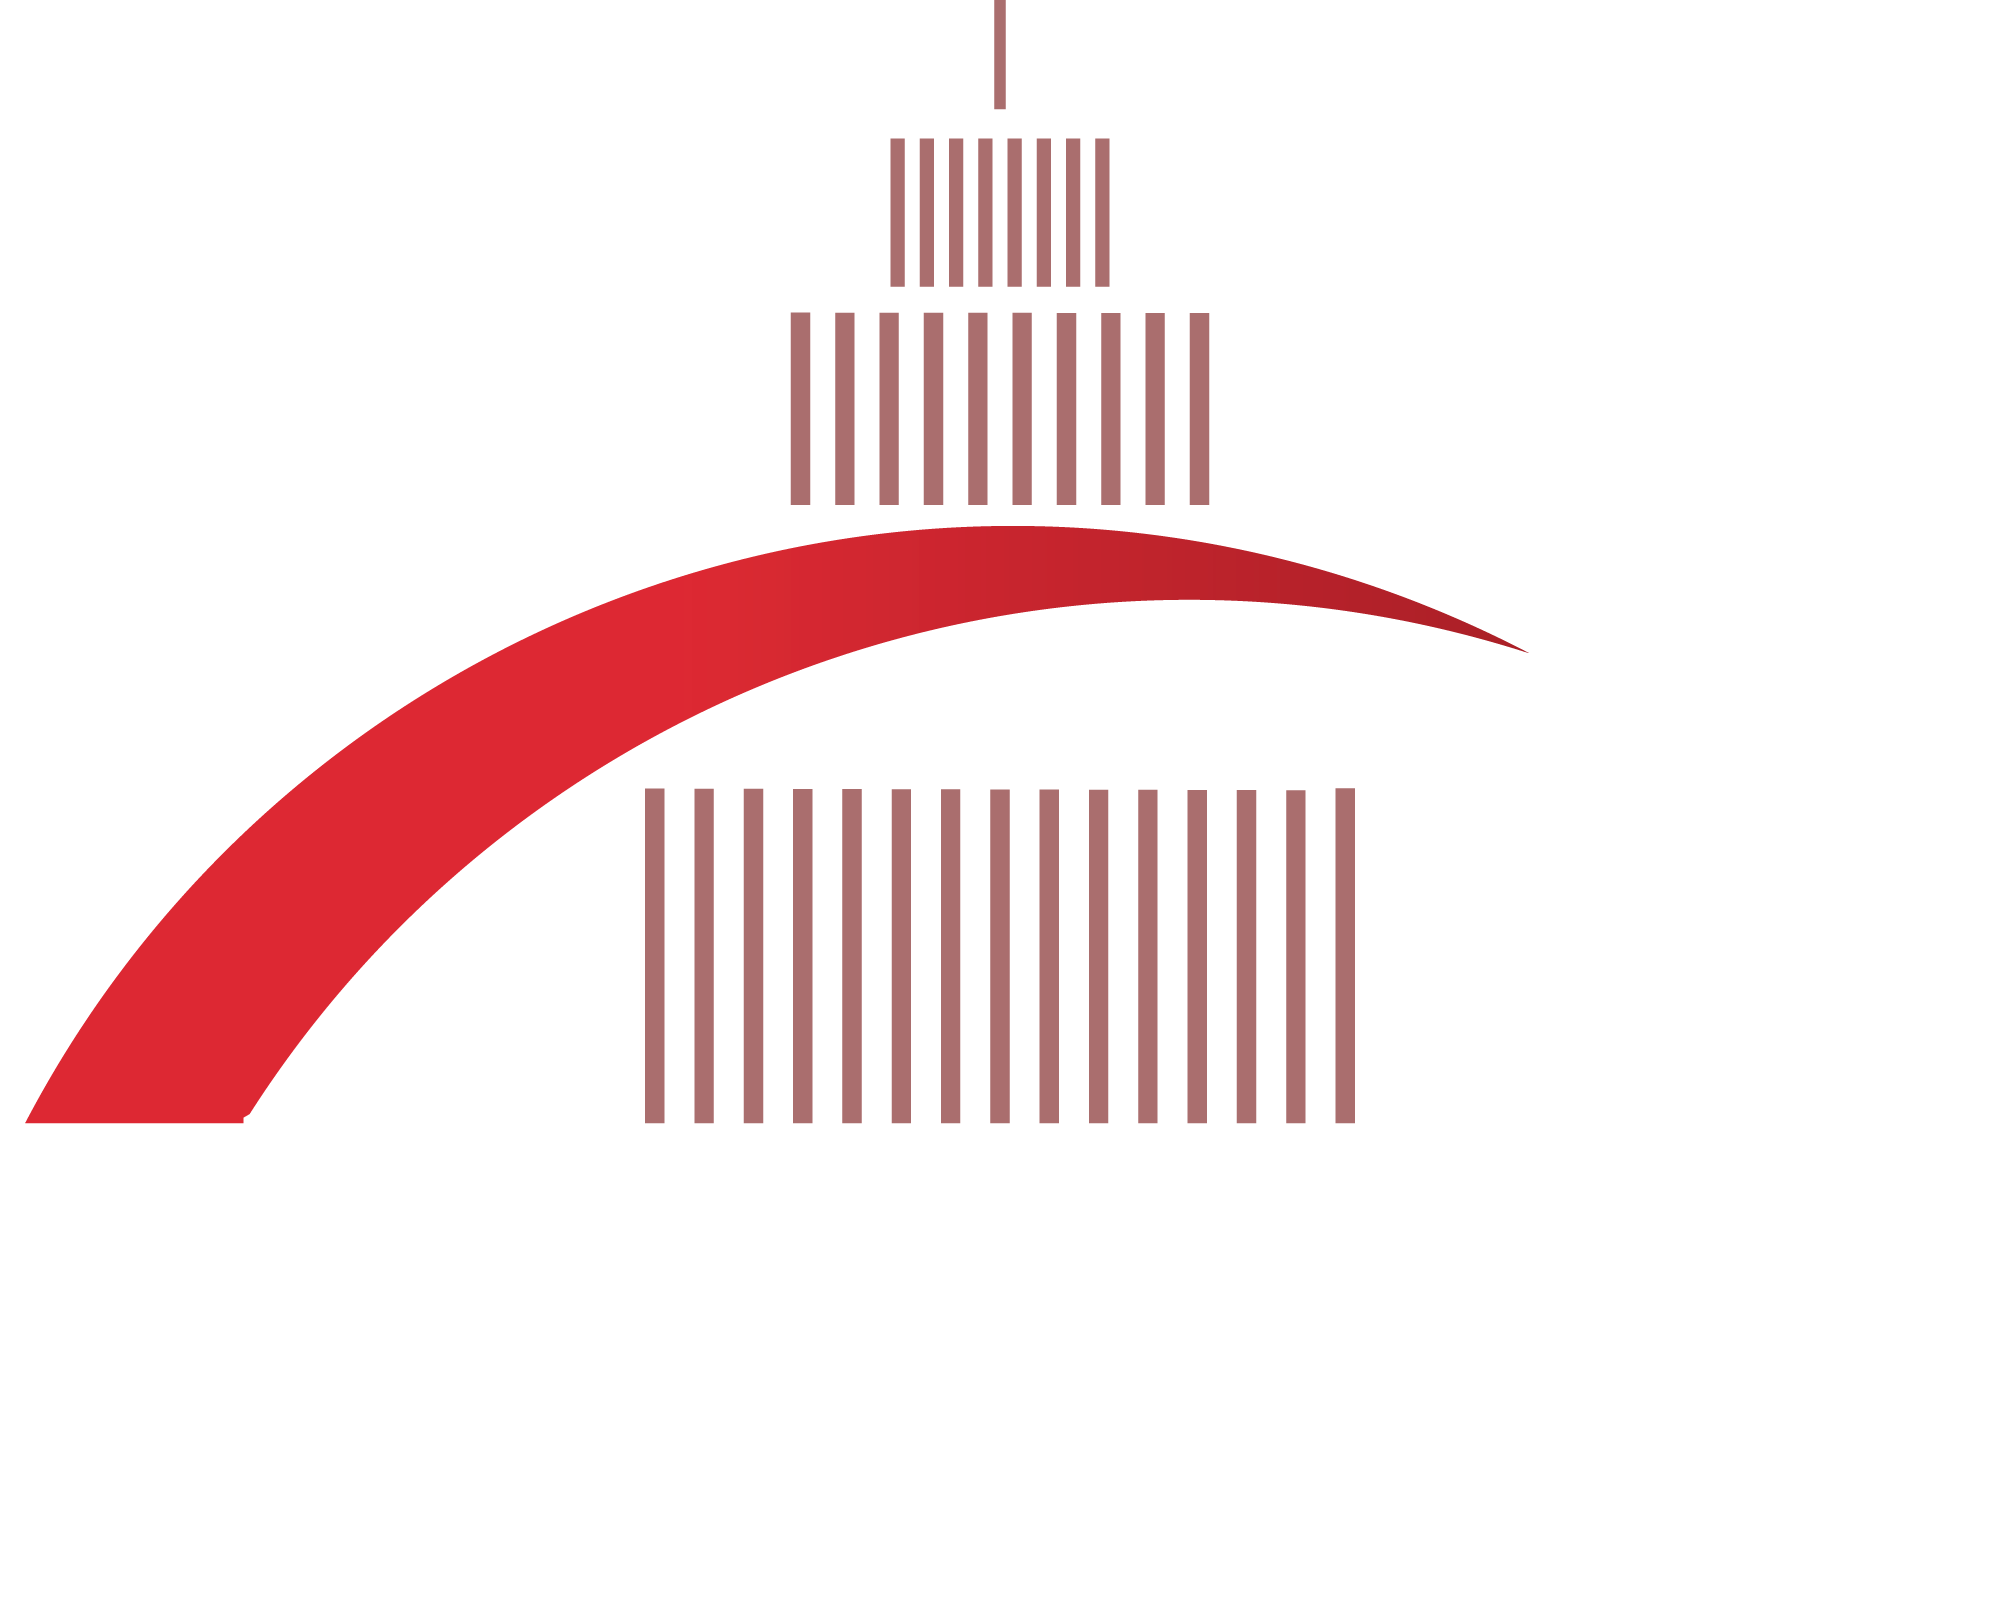 Venus (208) Engineering & Construction Ltd